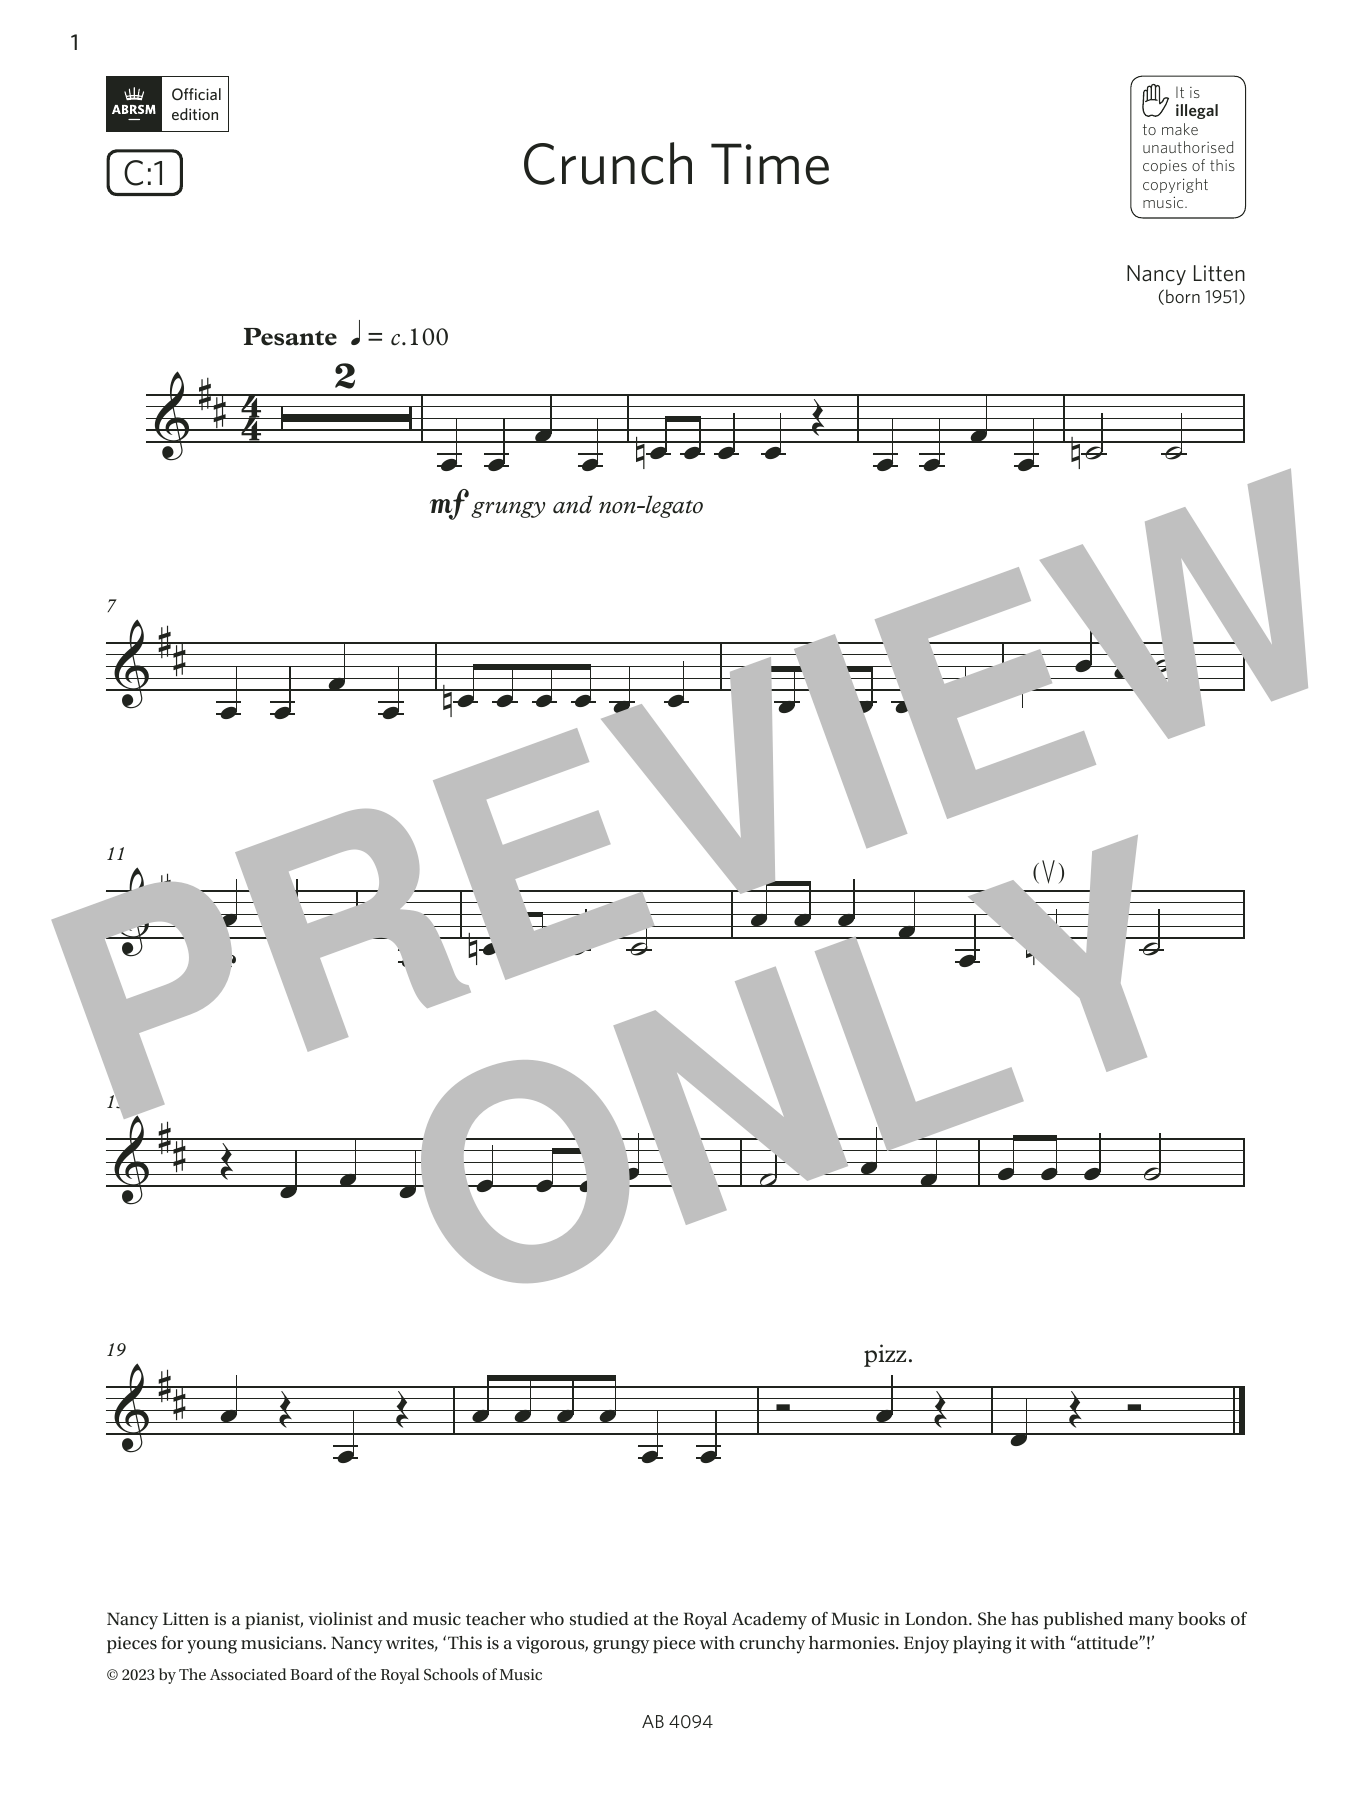 Download Nancy Litten Crunch Time (Grade Initial, C1, from th Sheet Music